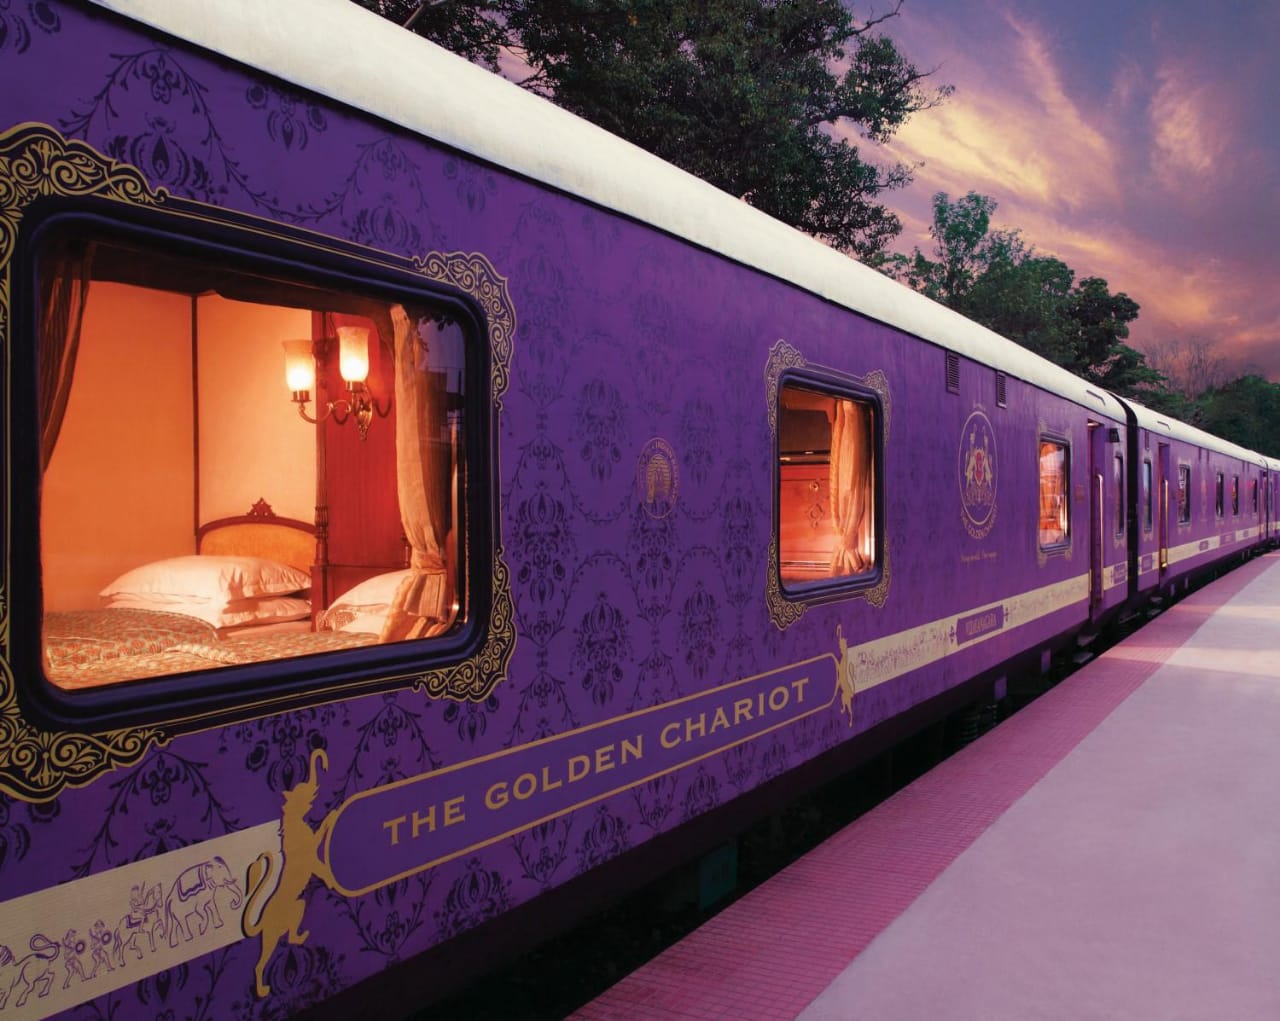 IRCTC takes over the prestigious luxury train The Golden Chariot